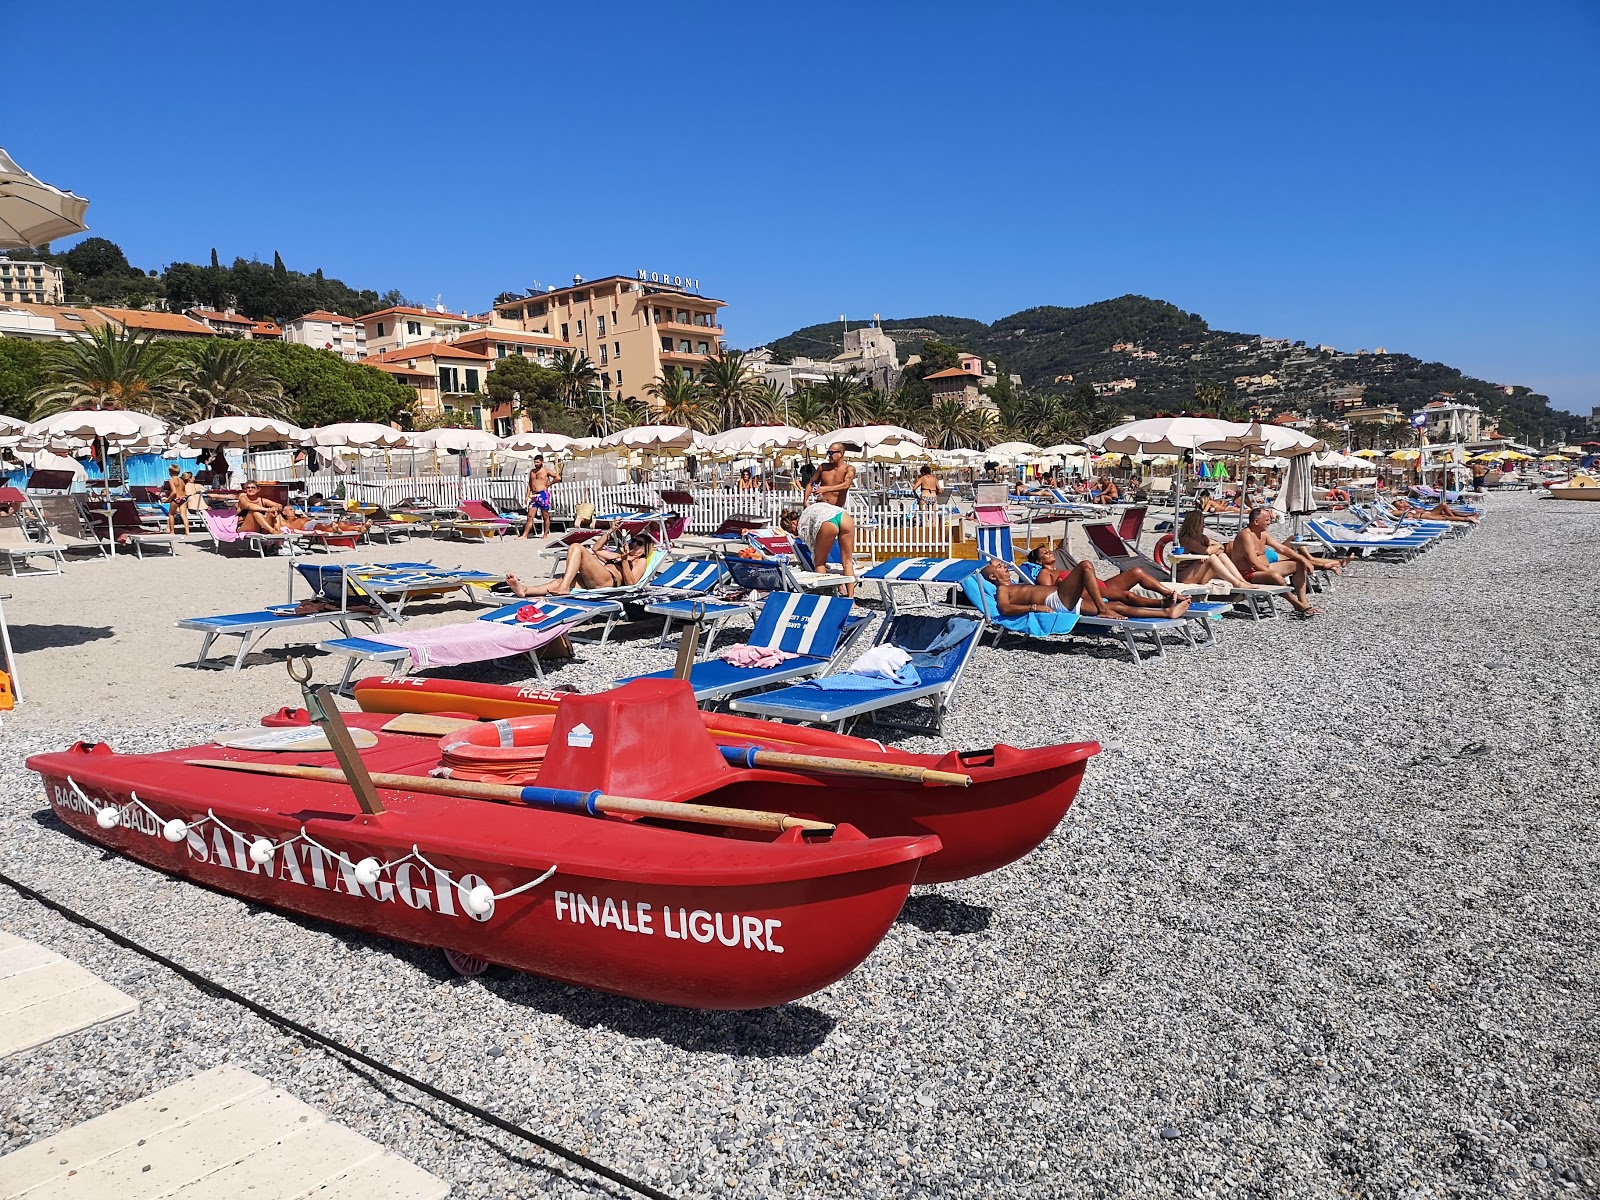 Foto av Spiaggia libera Attrezzata med hög nivå av renlighet